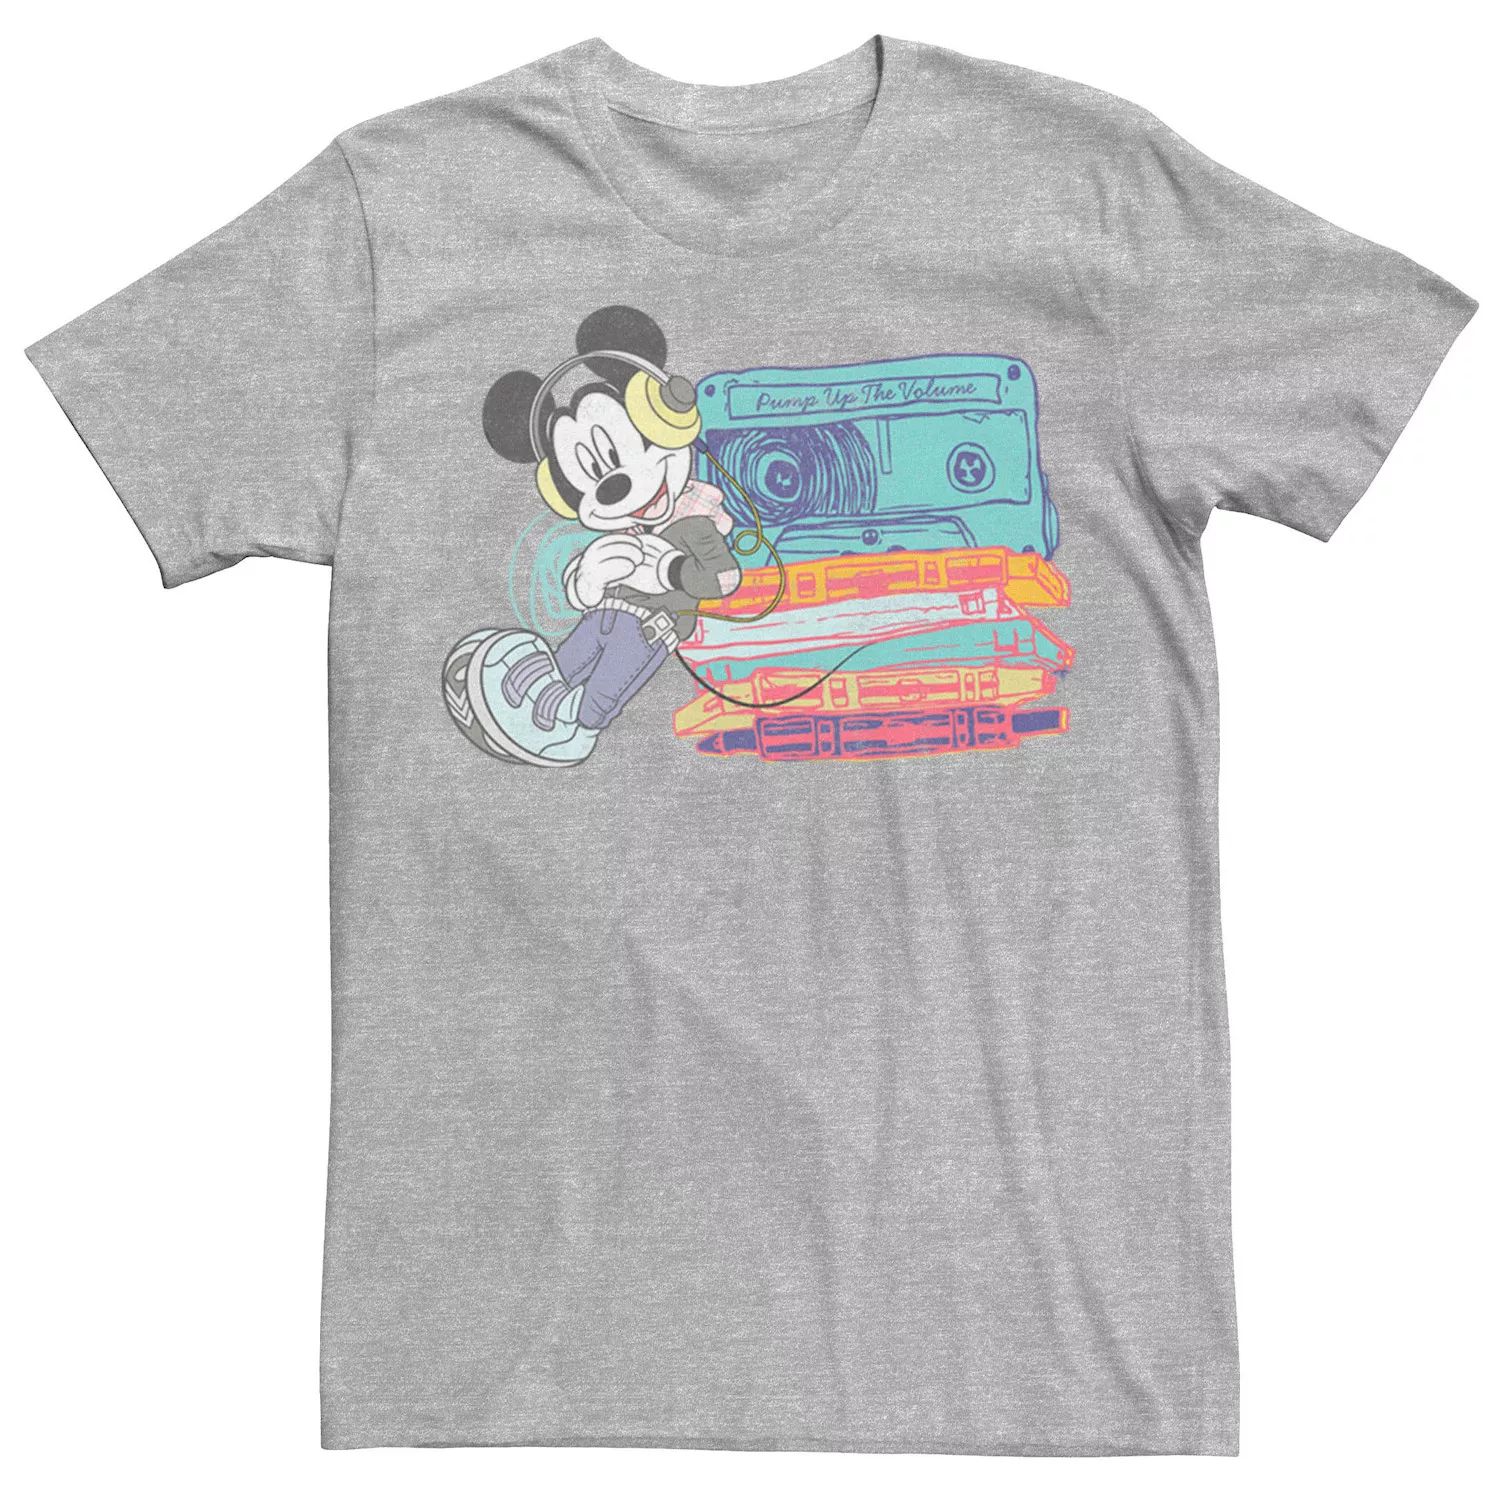 Мужская футболка с Микки Маусом и Микки Маусом Disney